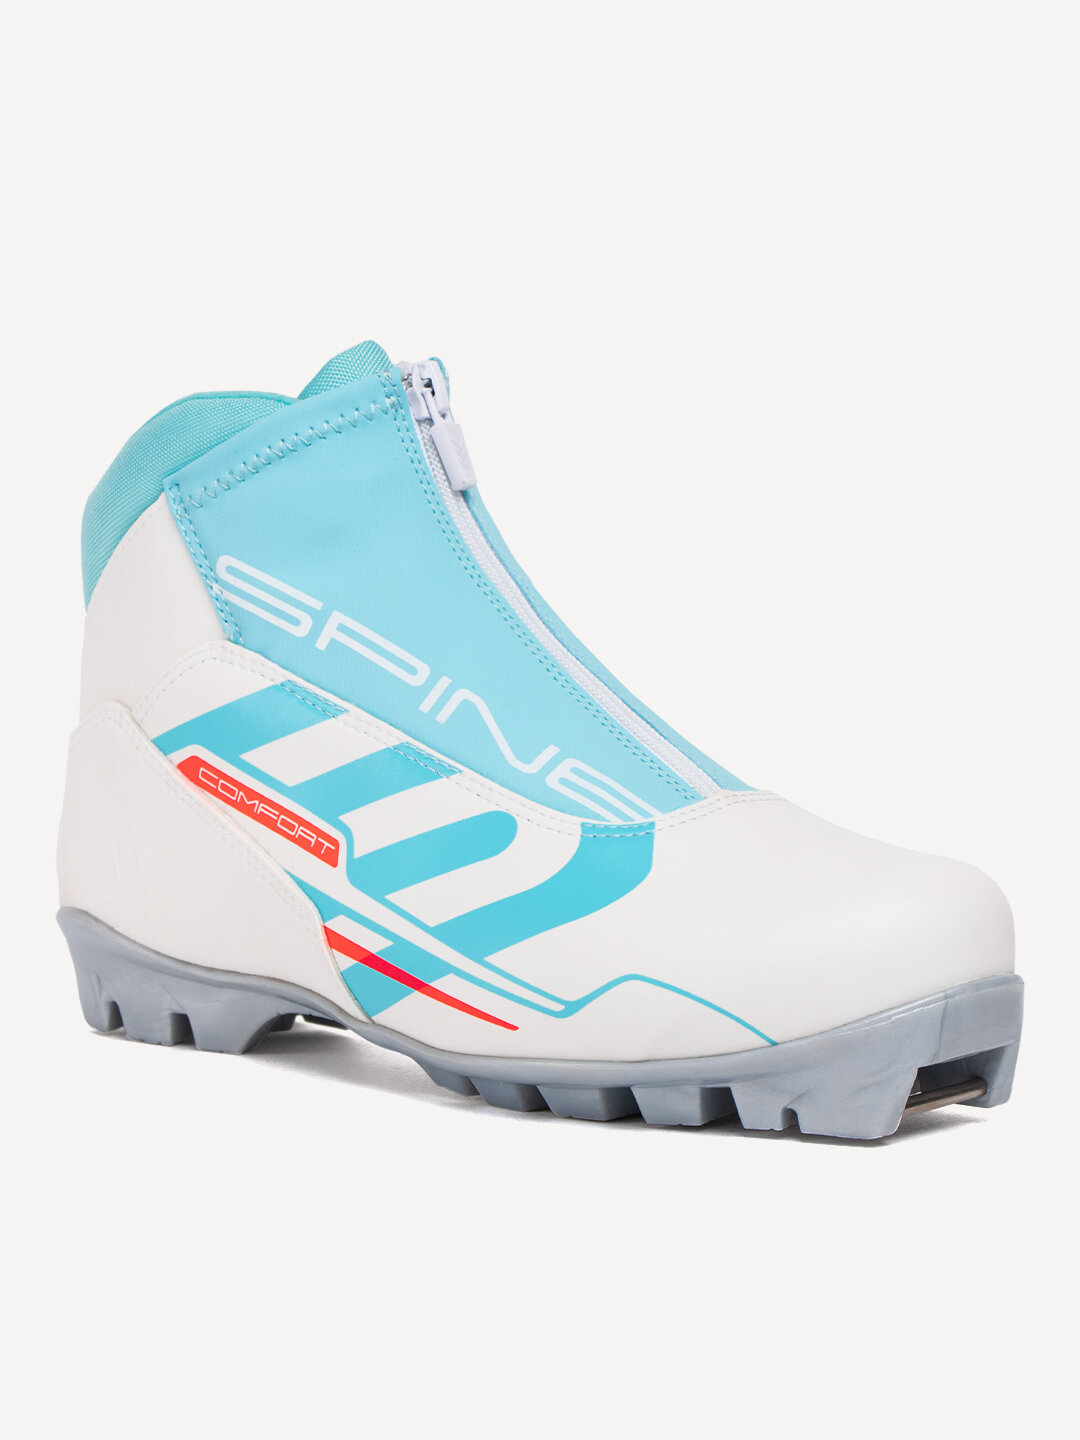 Лыжные ботинки SPINE NNN Comfort (83/4) (белый/бирюзовый) (37)